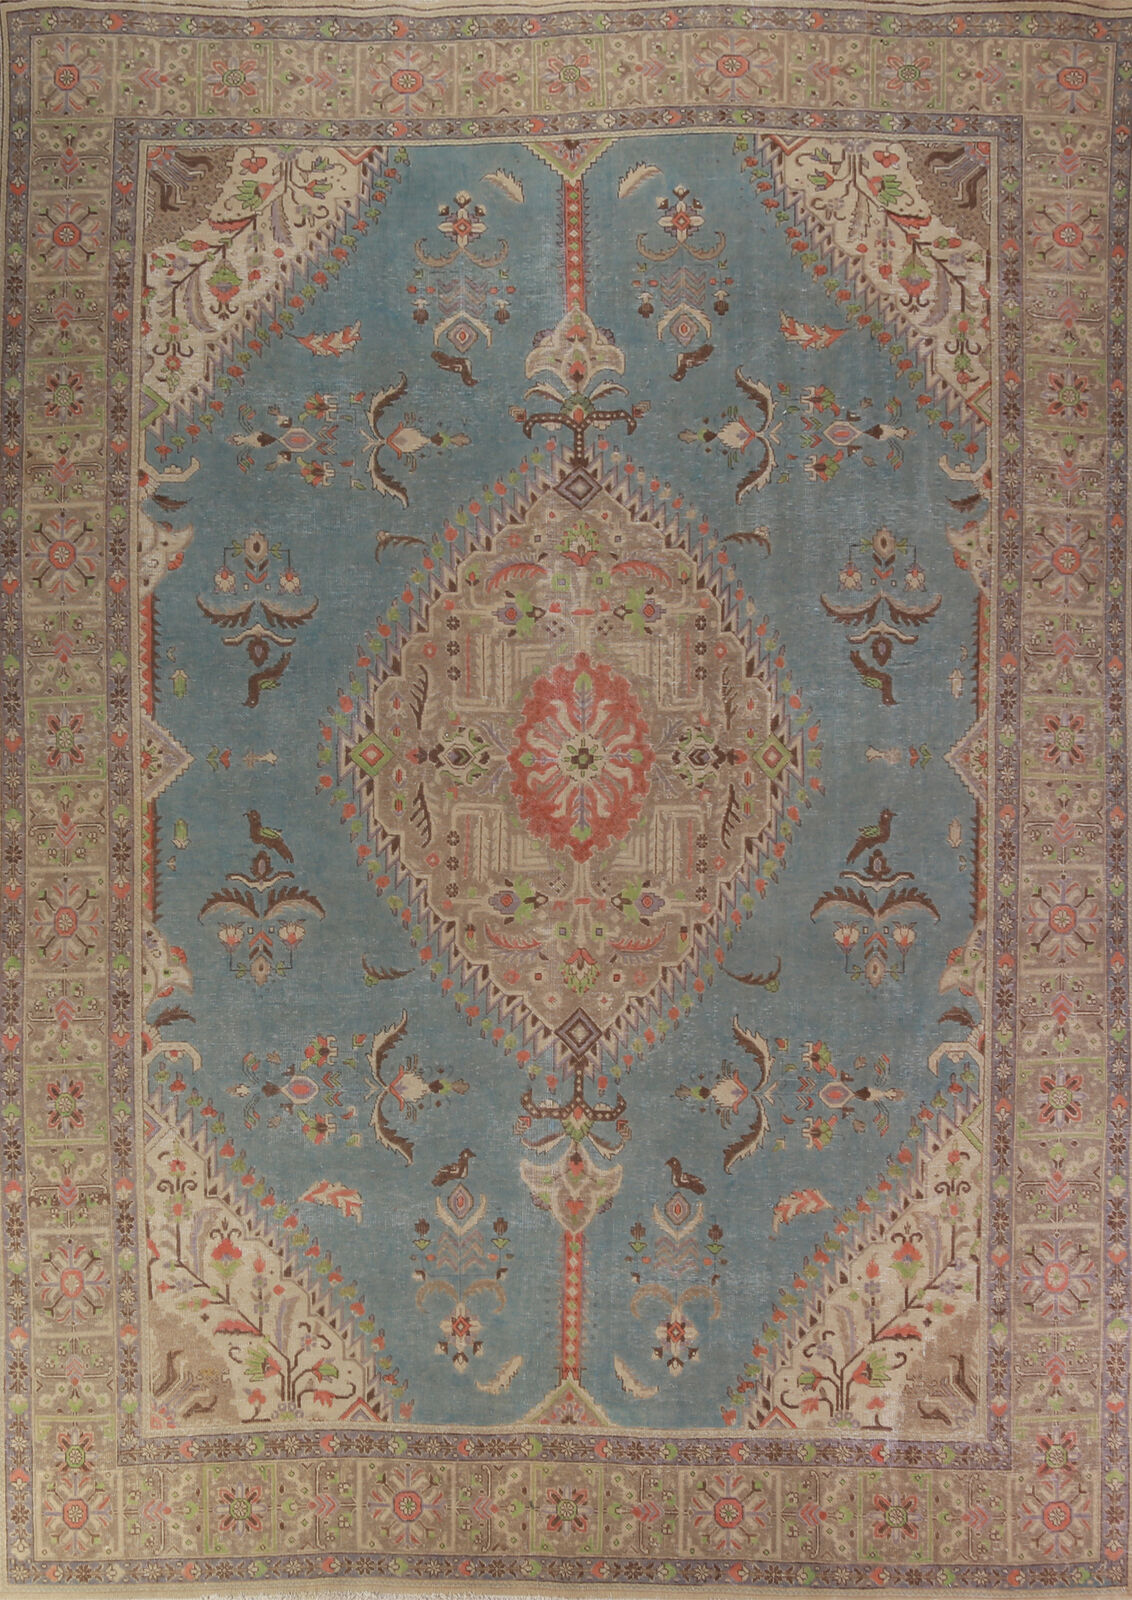 Traditional Handmade Wool Vintage Over-Dyed Blue Medallion Tebriz Area Rug 9x12